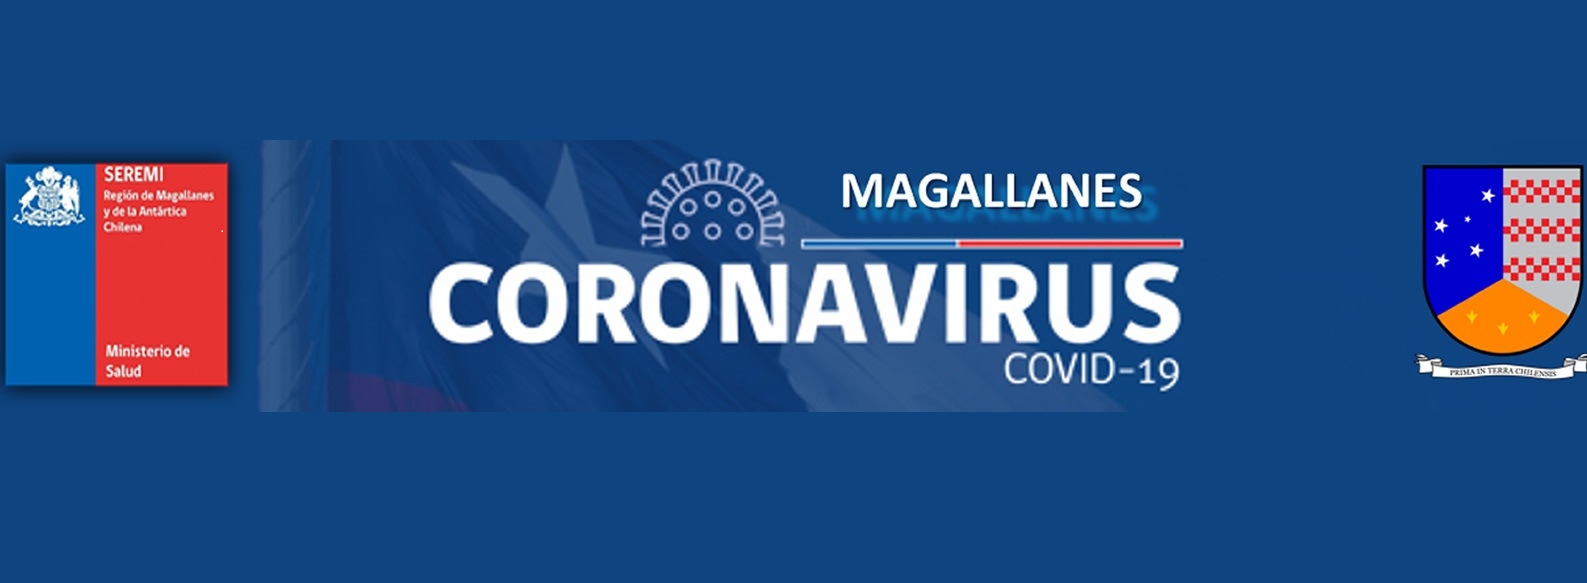 Municipalidad de Cabo de Hornos promueve difusión de información actualizada sobre Covid19 en Magallanes